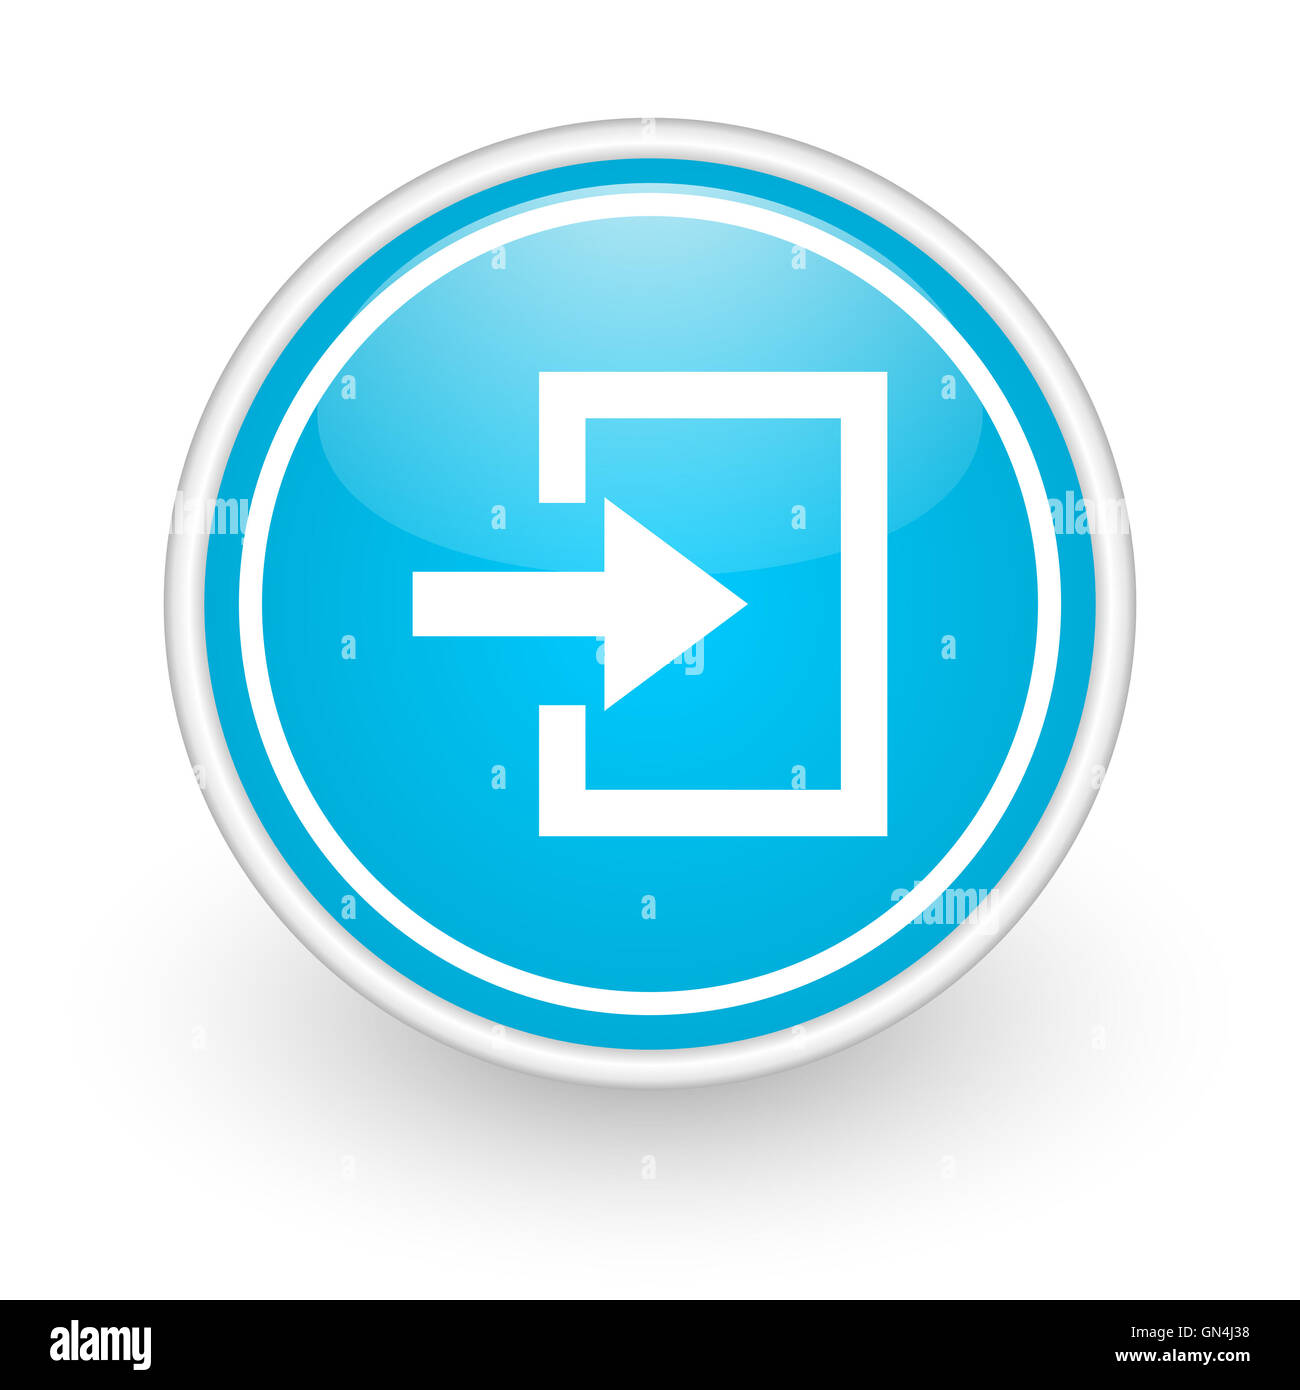 Login icon stock illustration. Illustration of button - 72946790